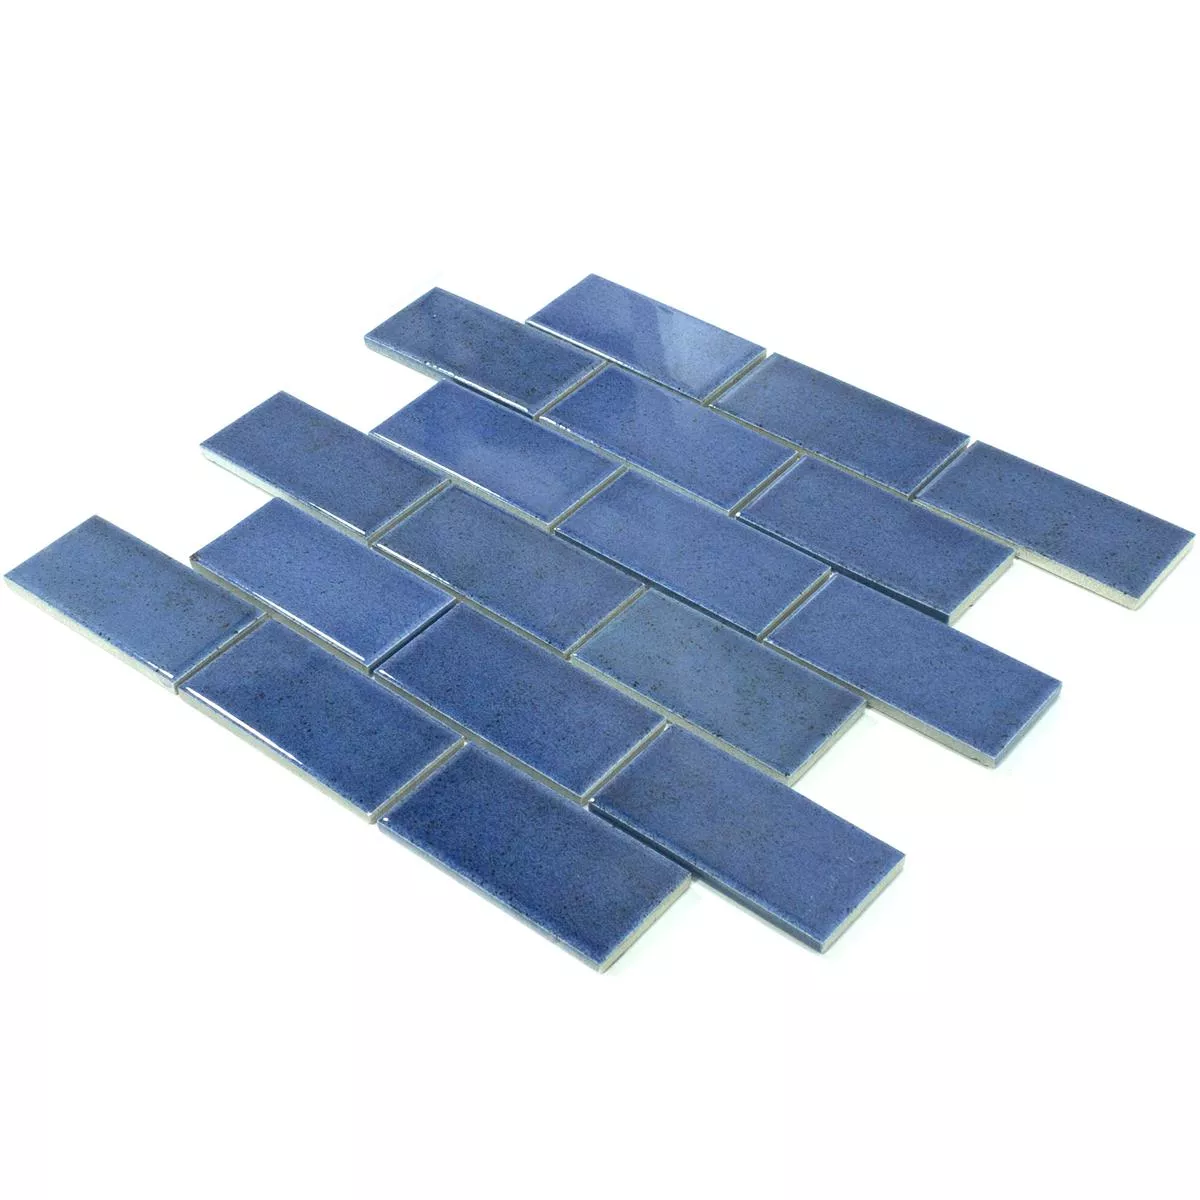 Campione Ceramica Mosaico Eldertown Brick Blu Scuro